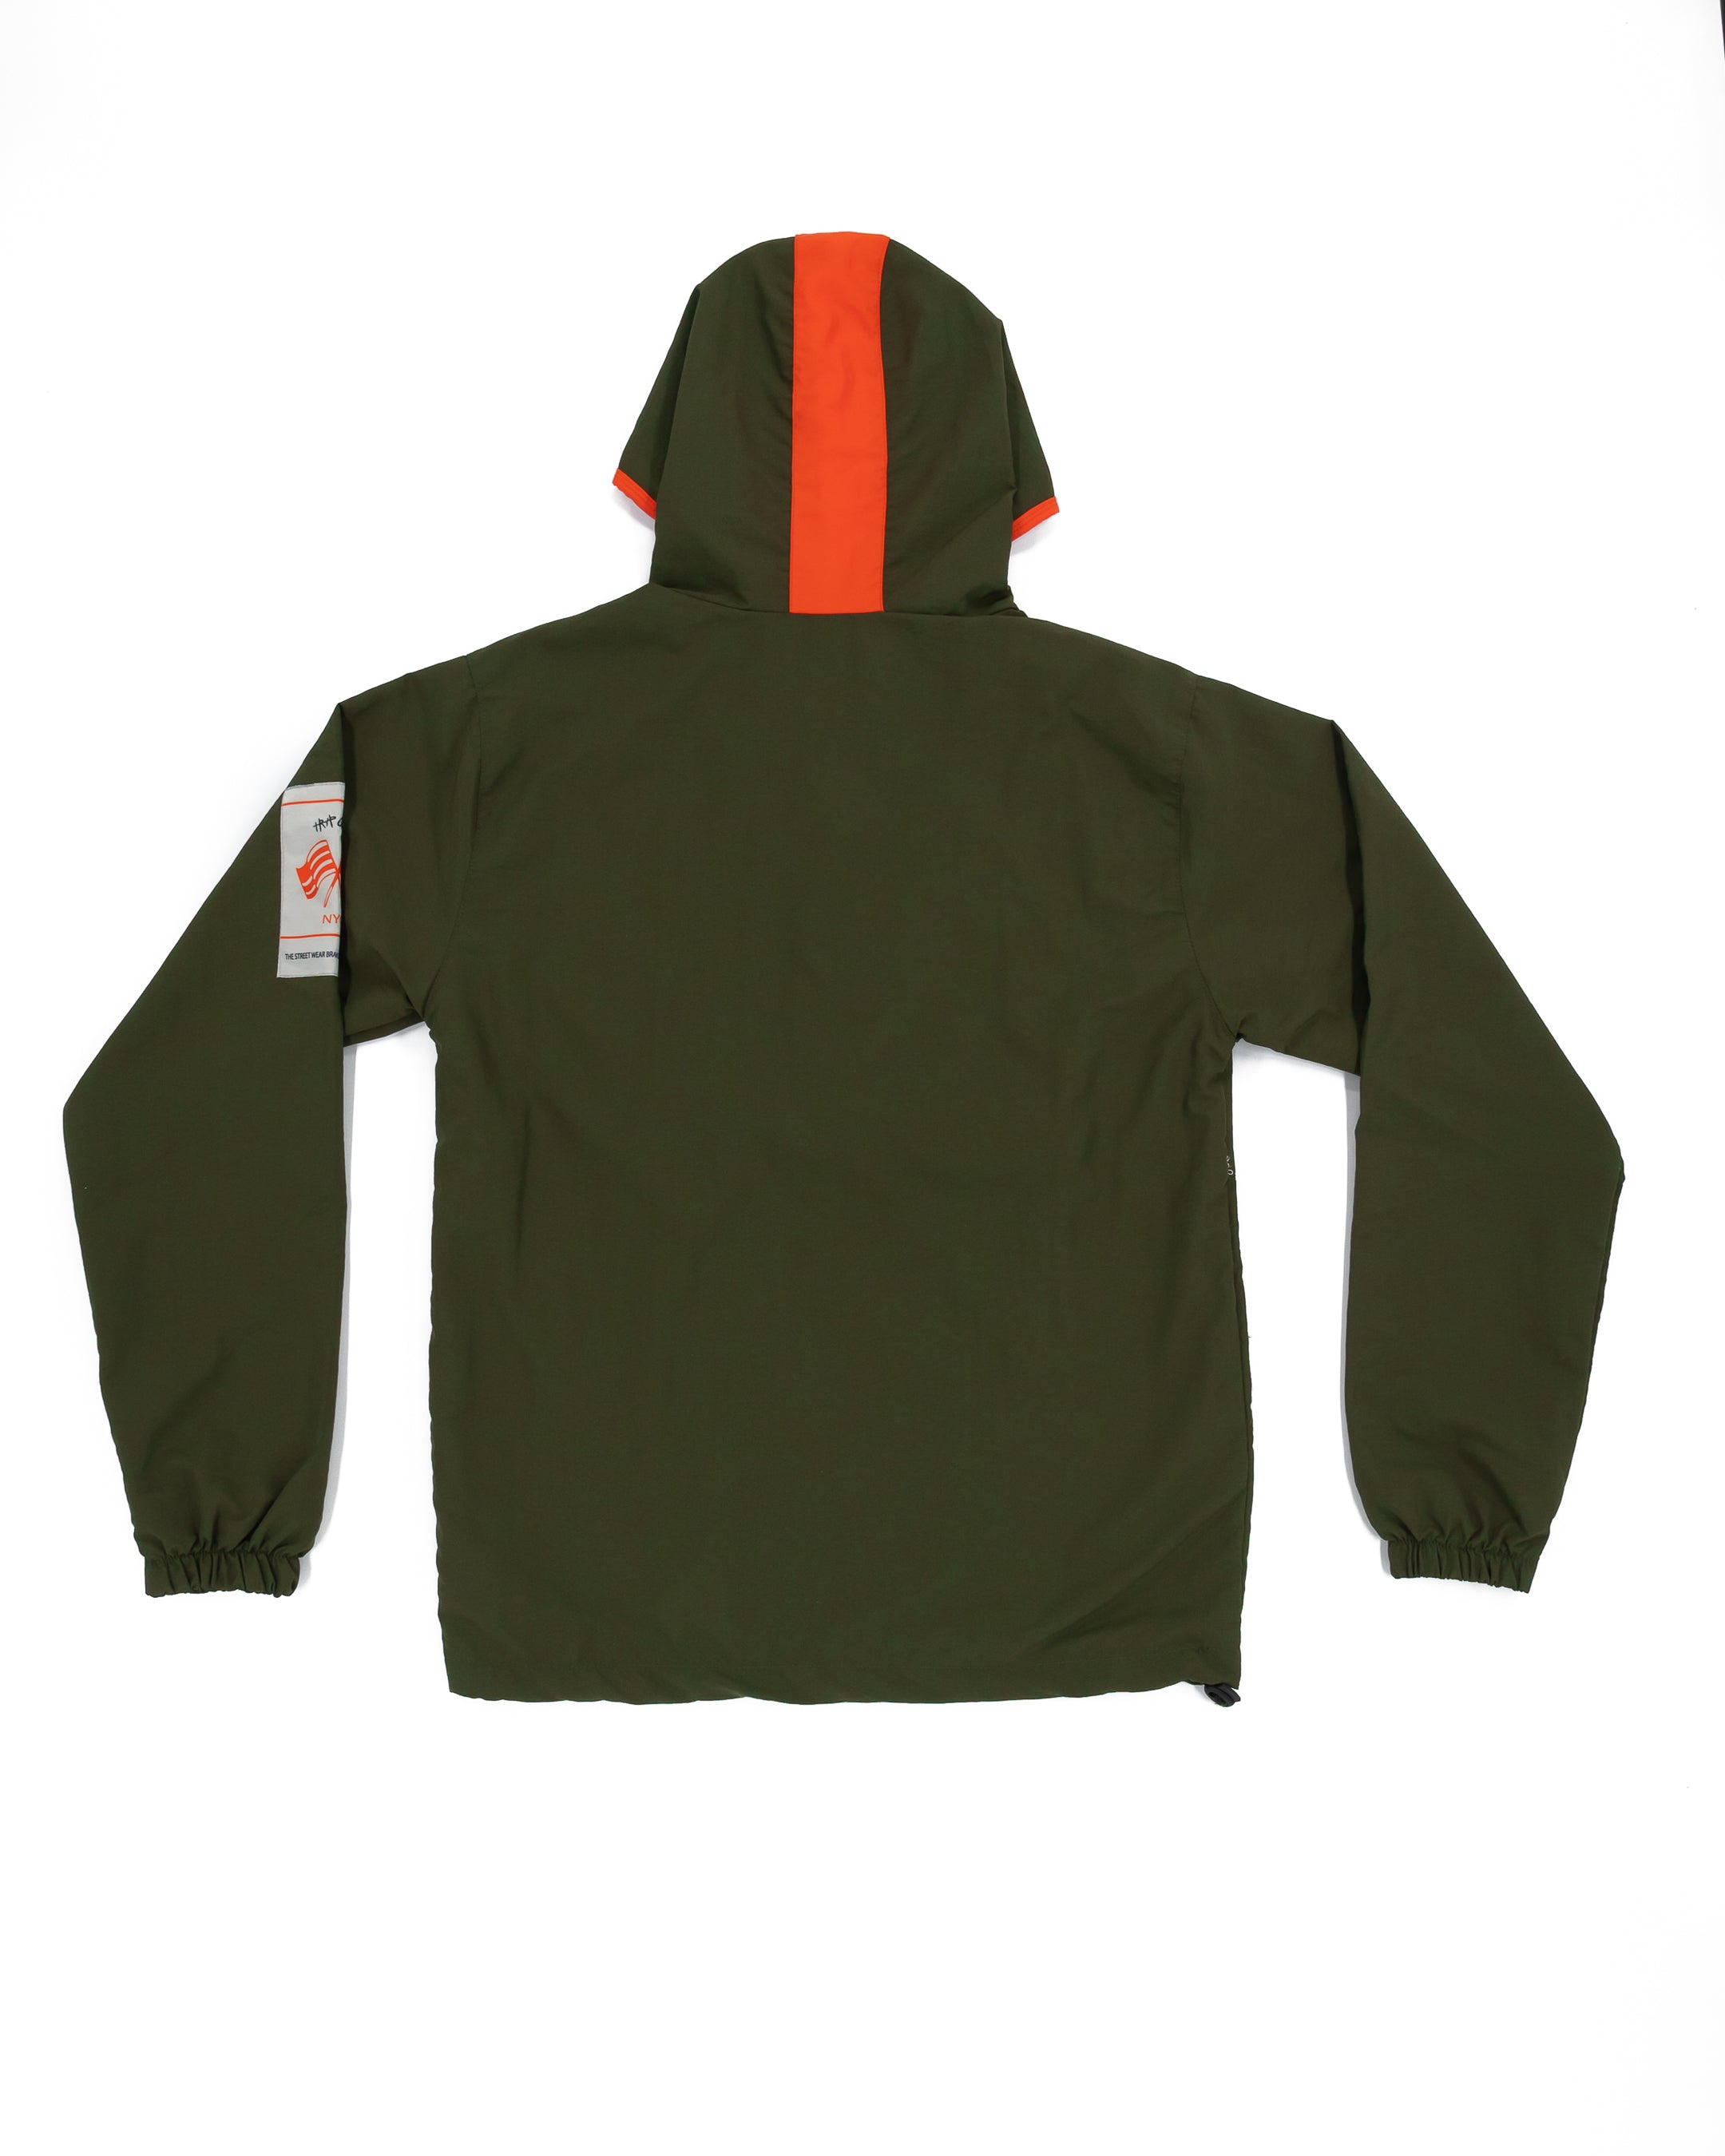 Trap Genius Bag logo Nylon Pullover Half Zip Jacket- Olive Green